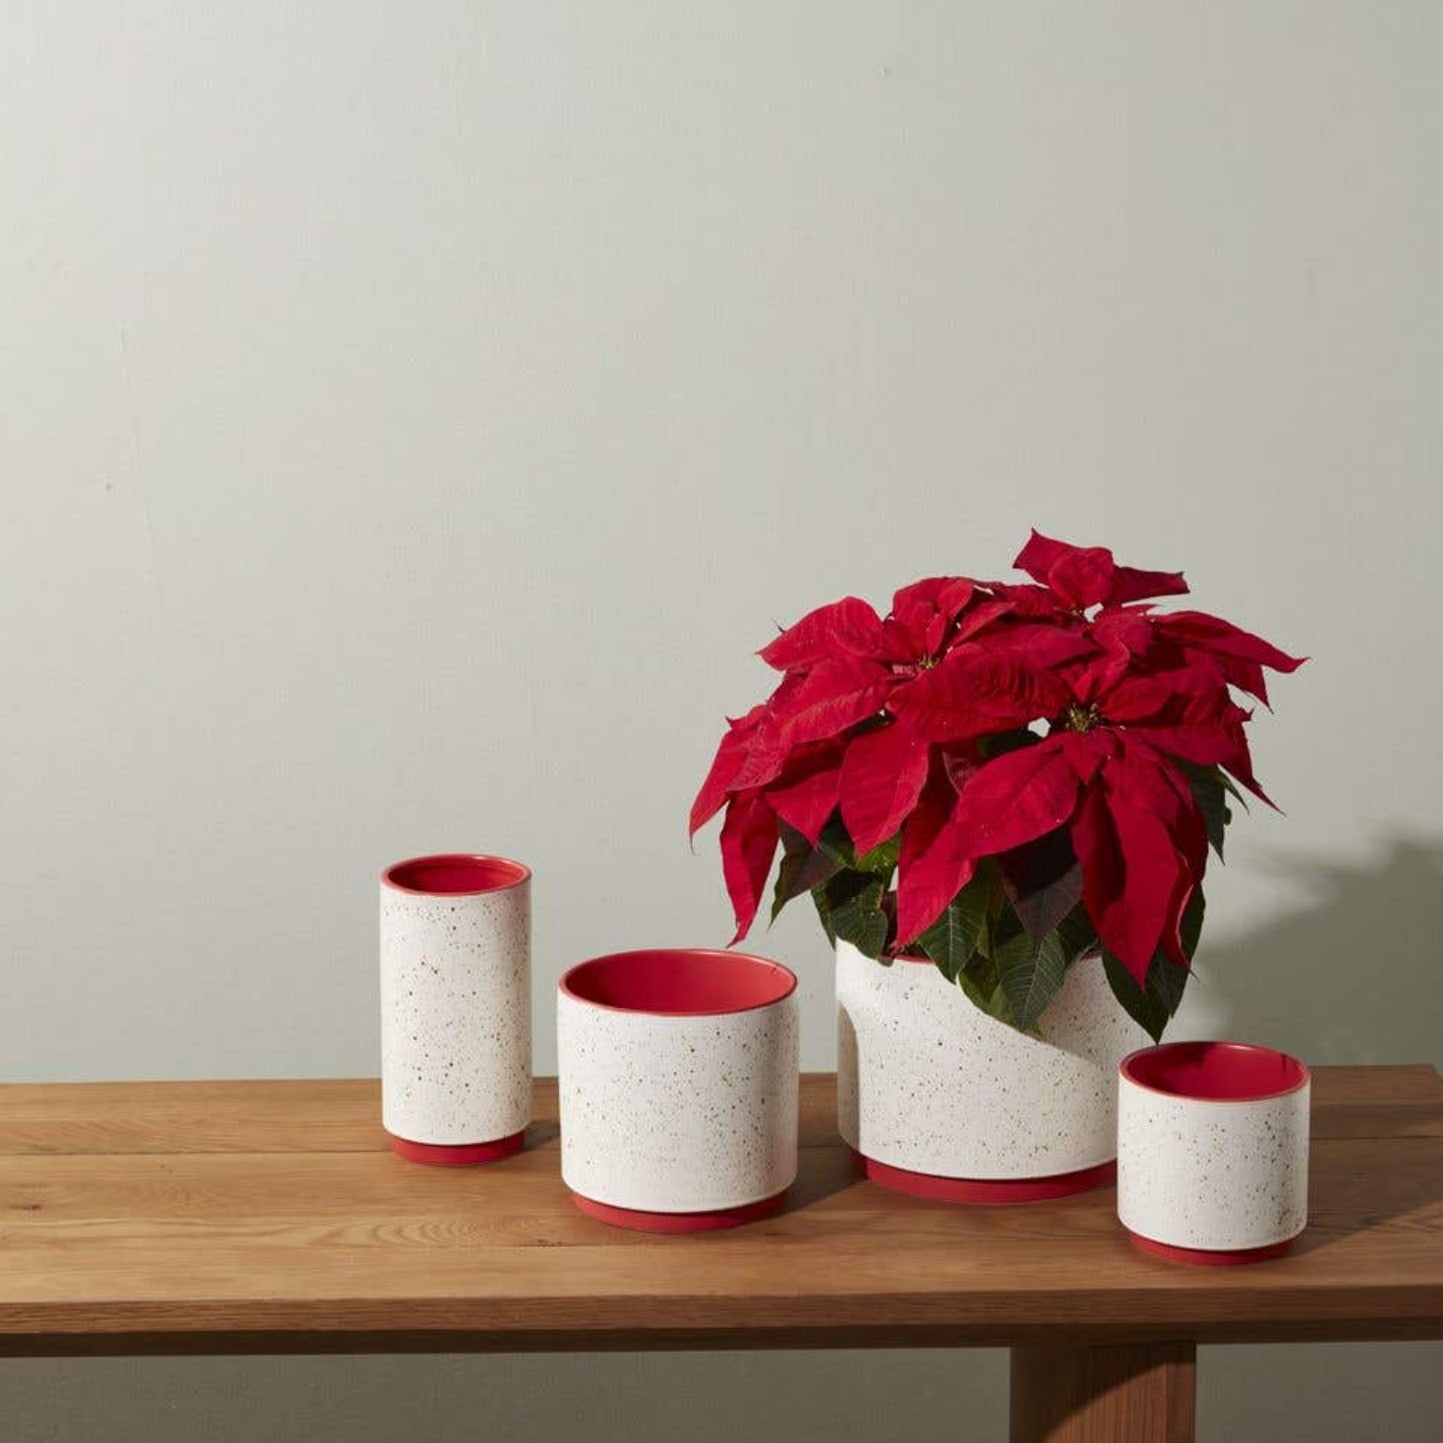 Kamba Red Ceramic Vase & Pot Set - Orchid-Ready, Speckled Finish